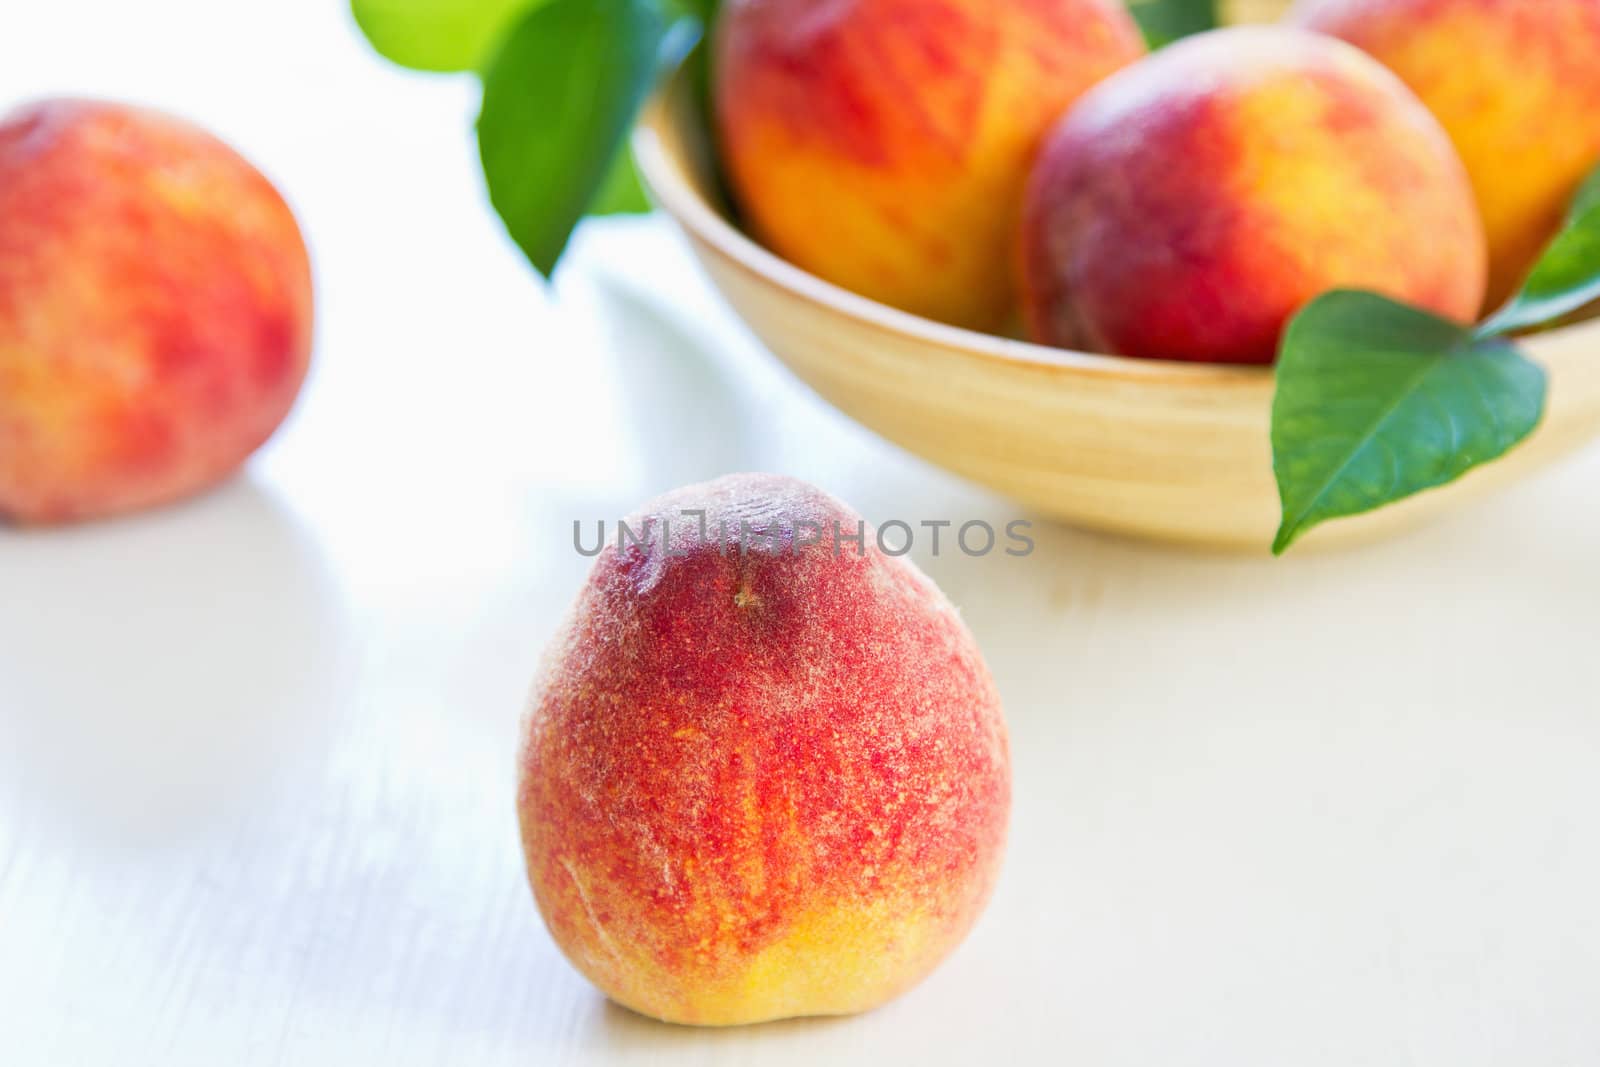 Peach by vanillaechoes